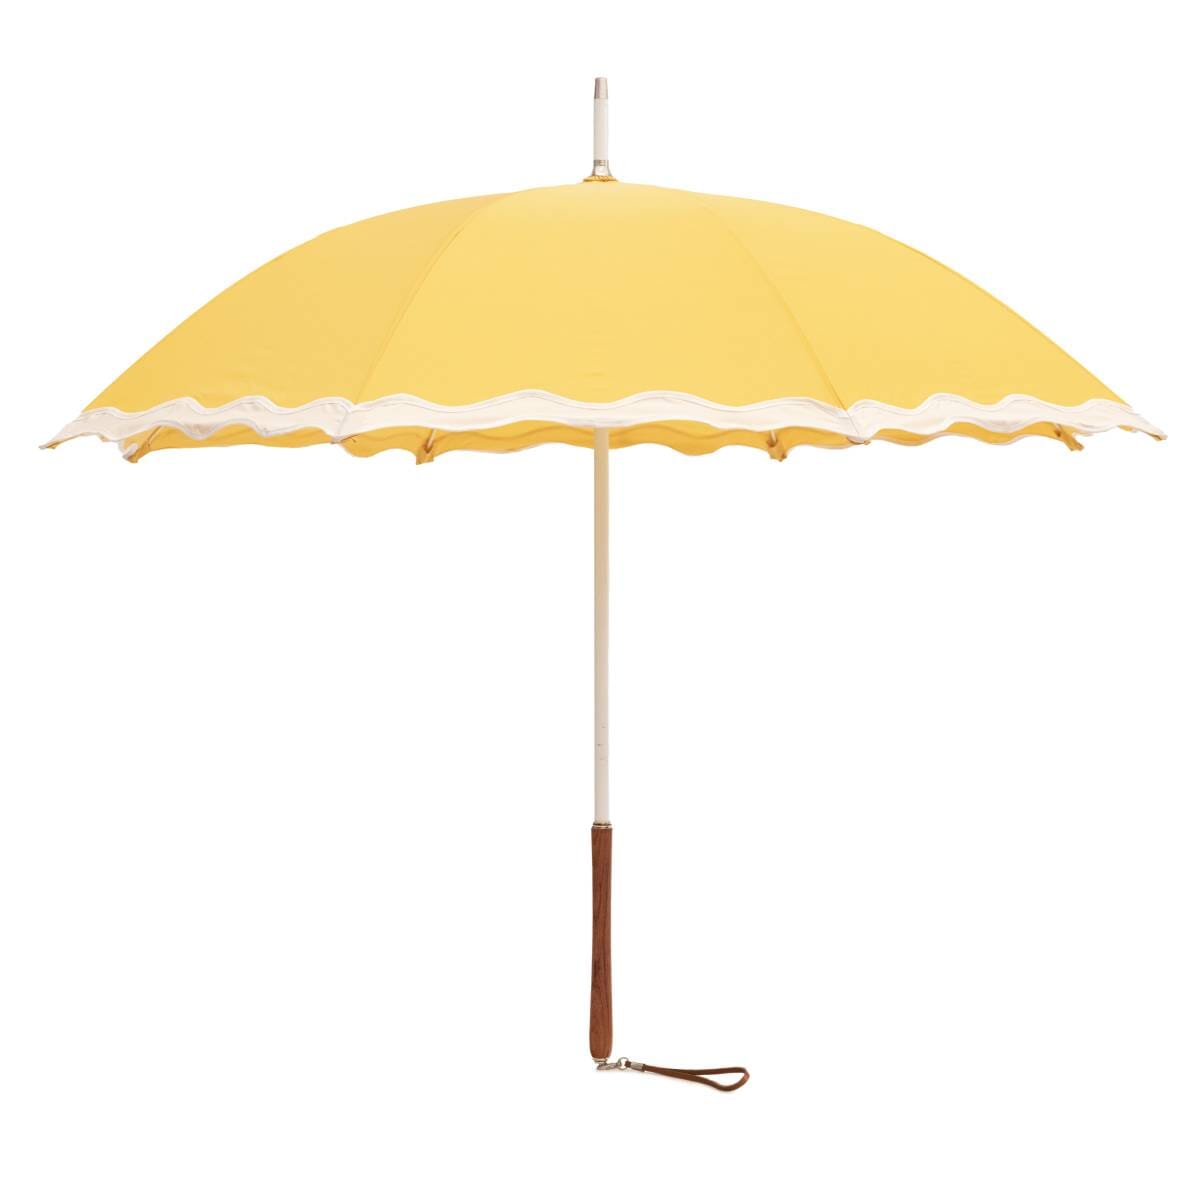 Studio image of riviera mimosa rain umbrella